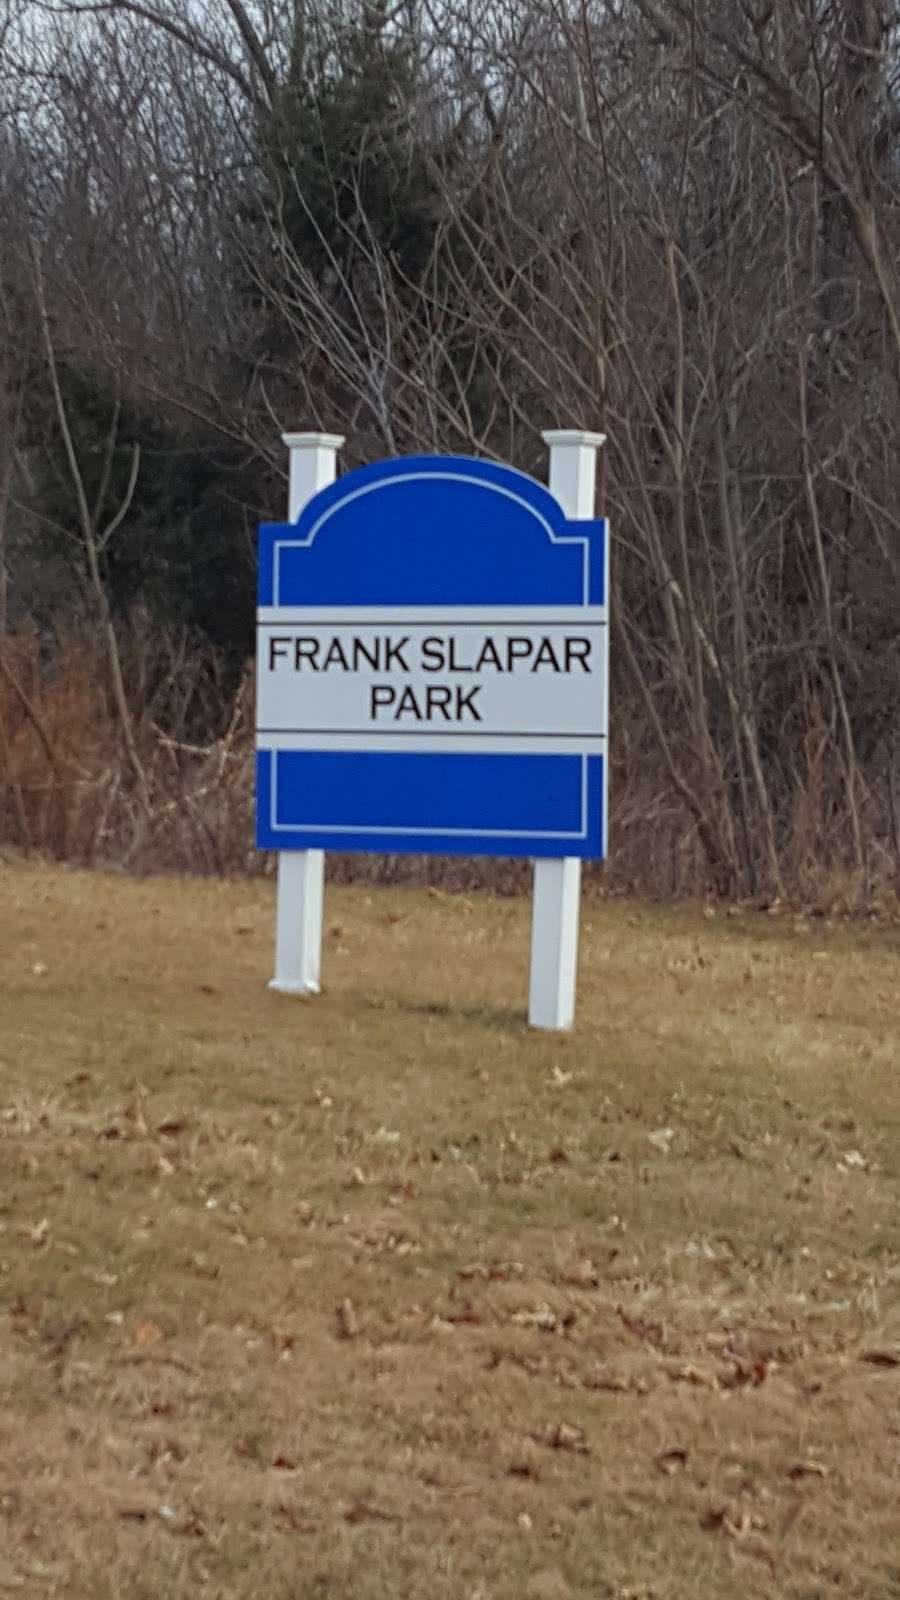 Frank Slapar Park | 34-2 Stites St, West Wyoming, PA 18644, USA